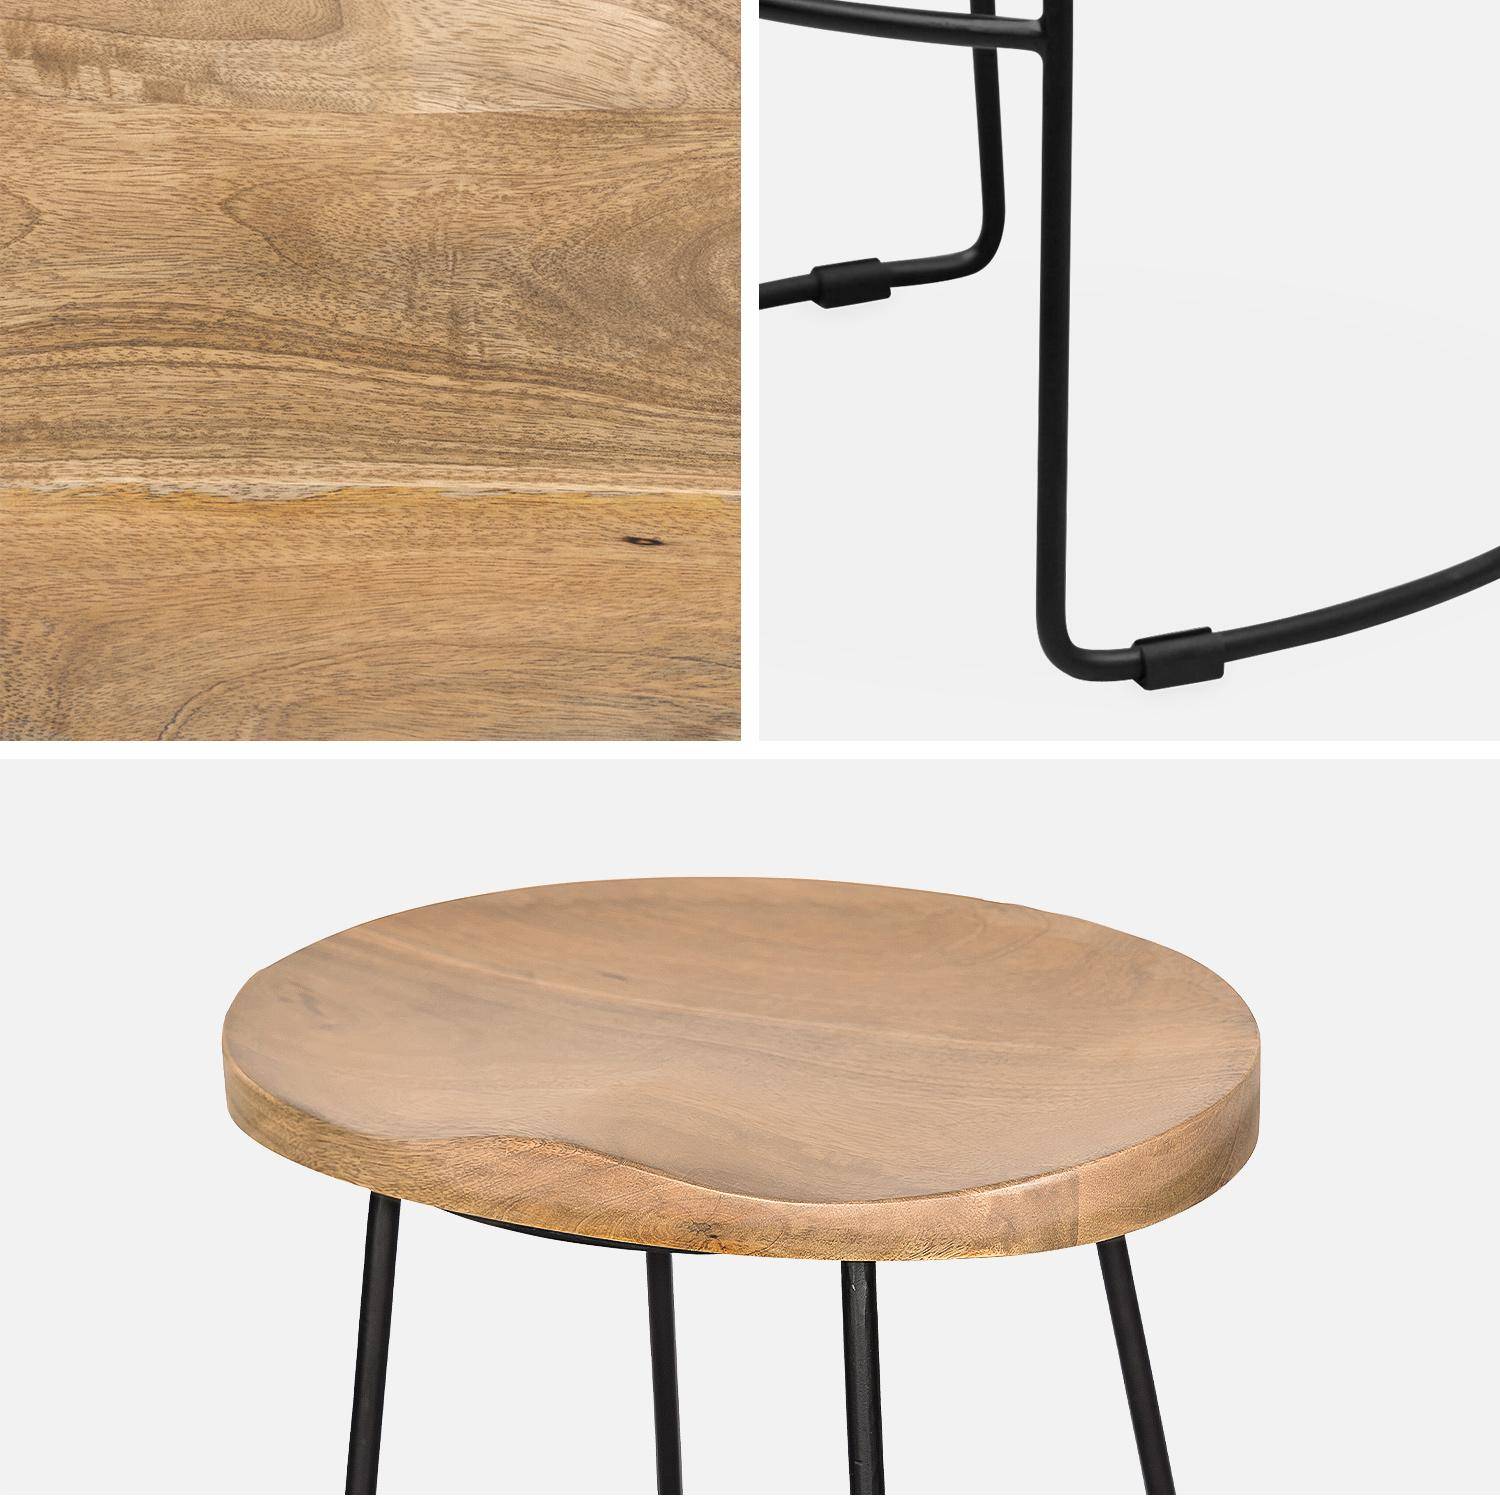 Pair of industrial metal and wooden bar stools, 44x36x65cm, Jaya, Natural, Mango wood seat, black metal legs,sweeek,Photo7